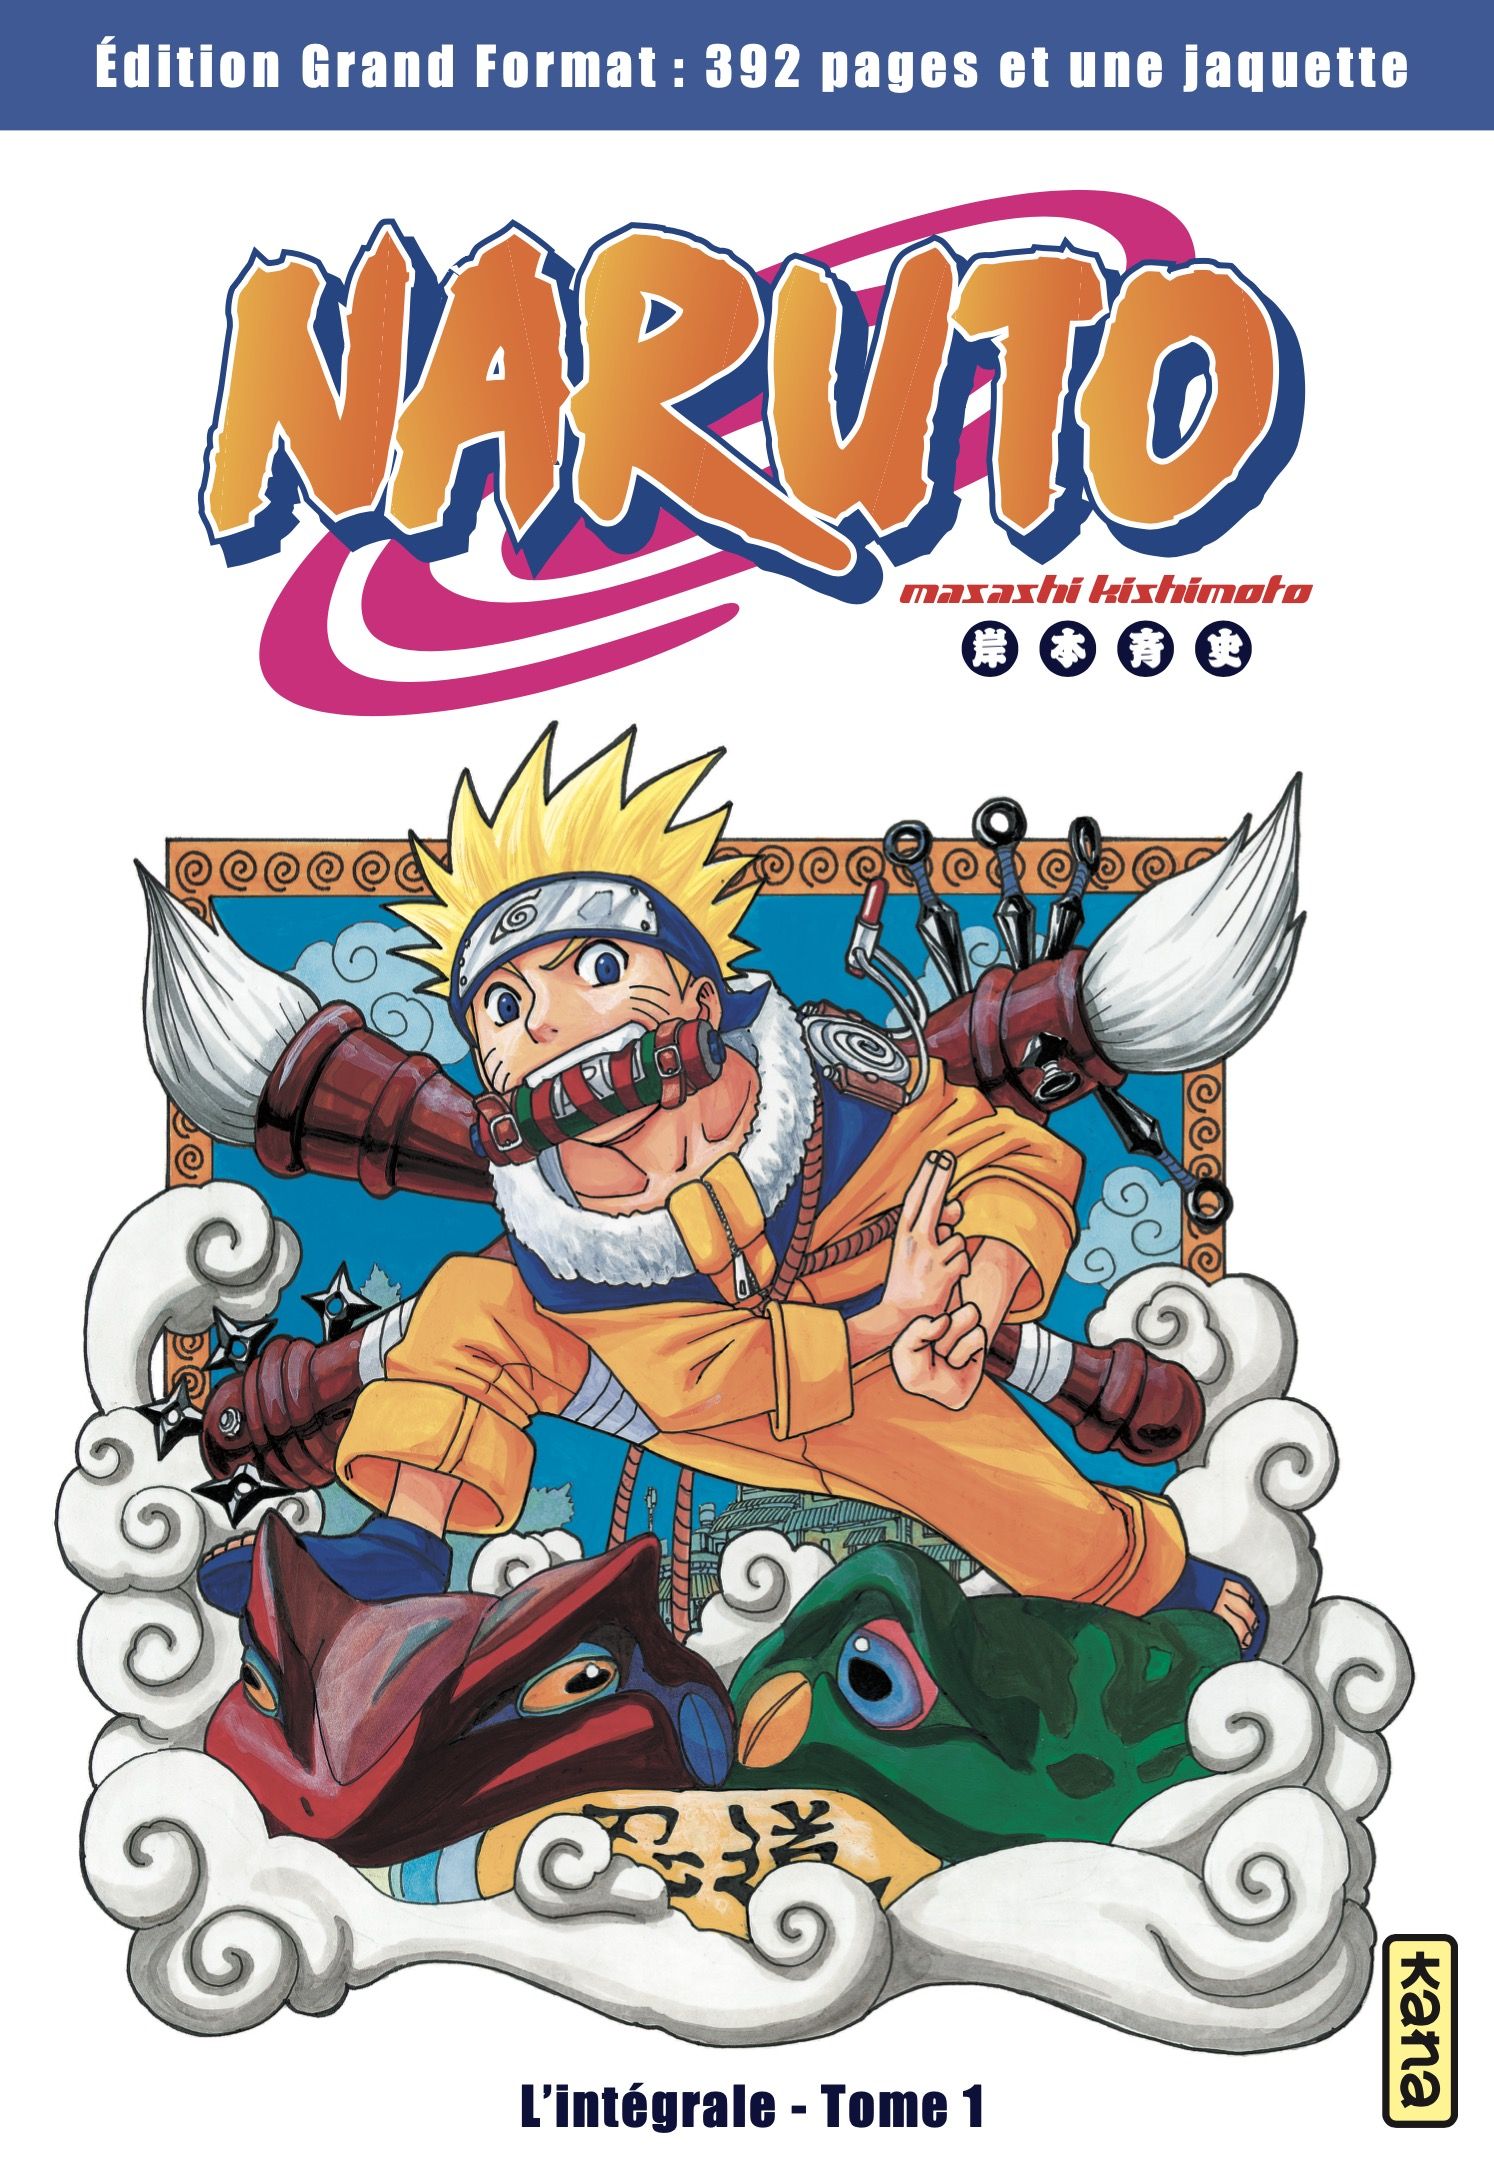 Vol Naruto Hachette Collection Manga Manga News